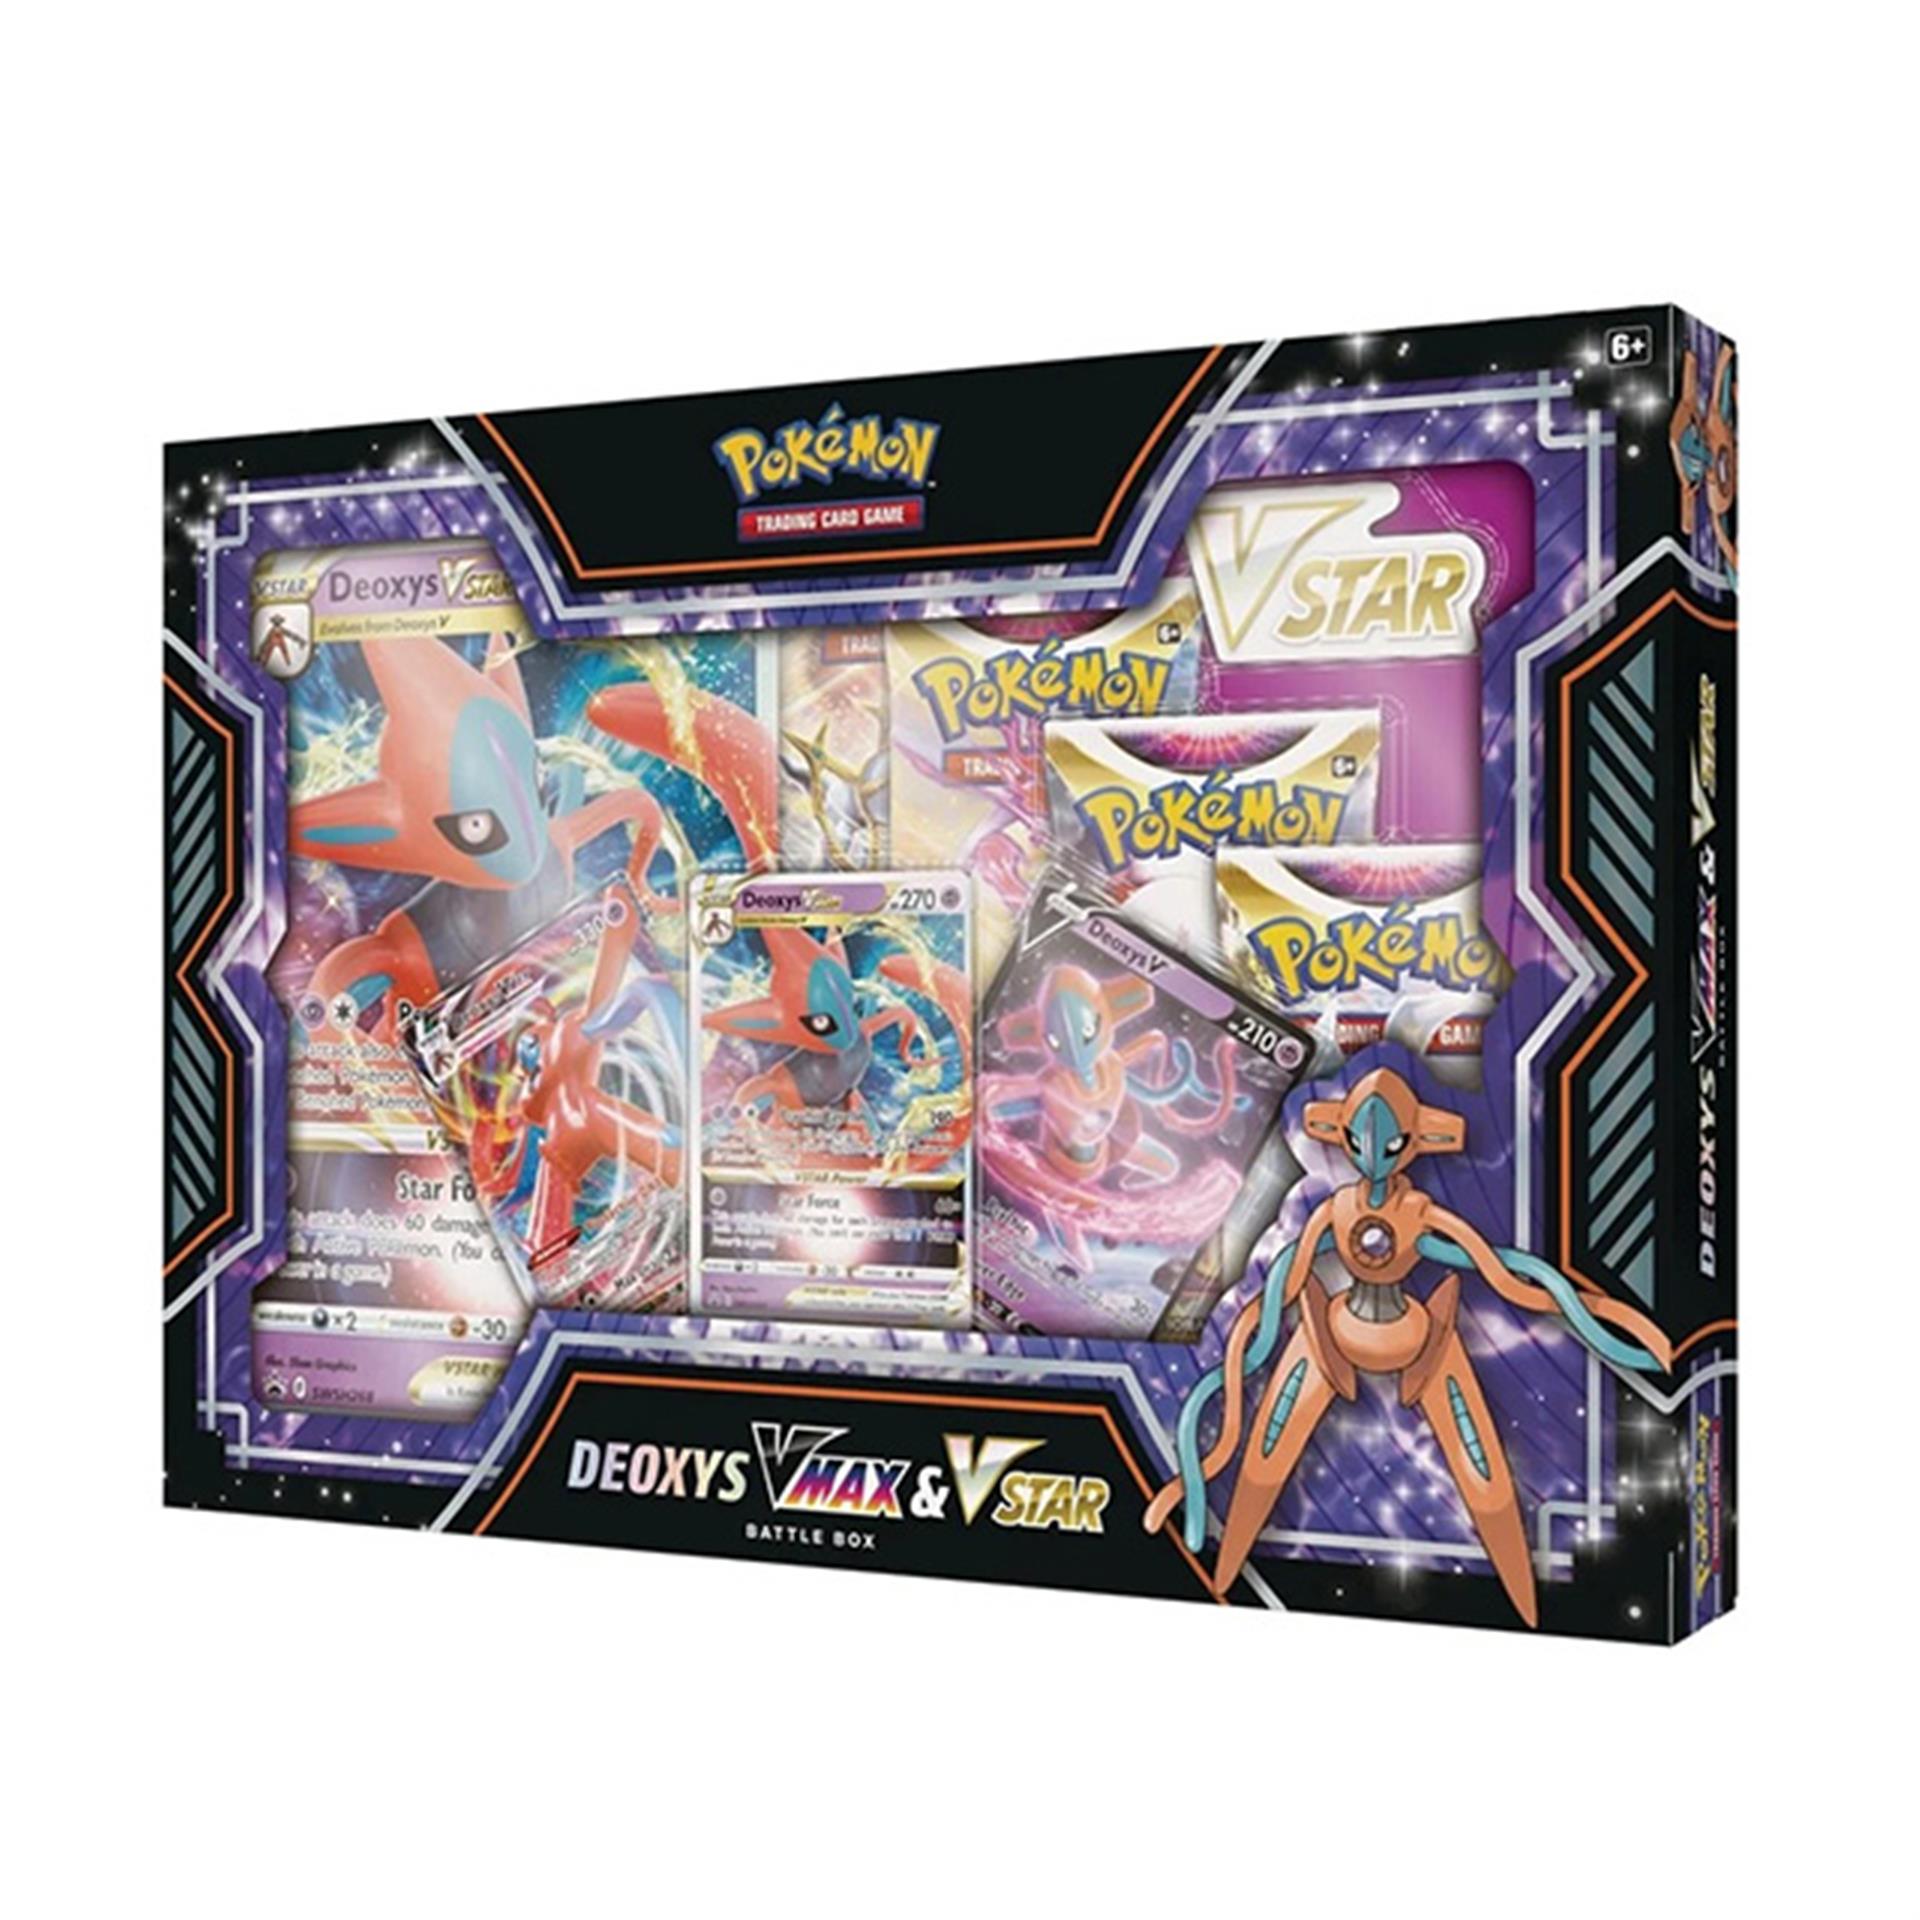 Pokémon Deoxys Battle Box VMAX & VSTAR